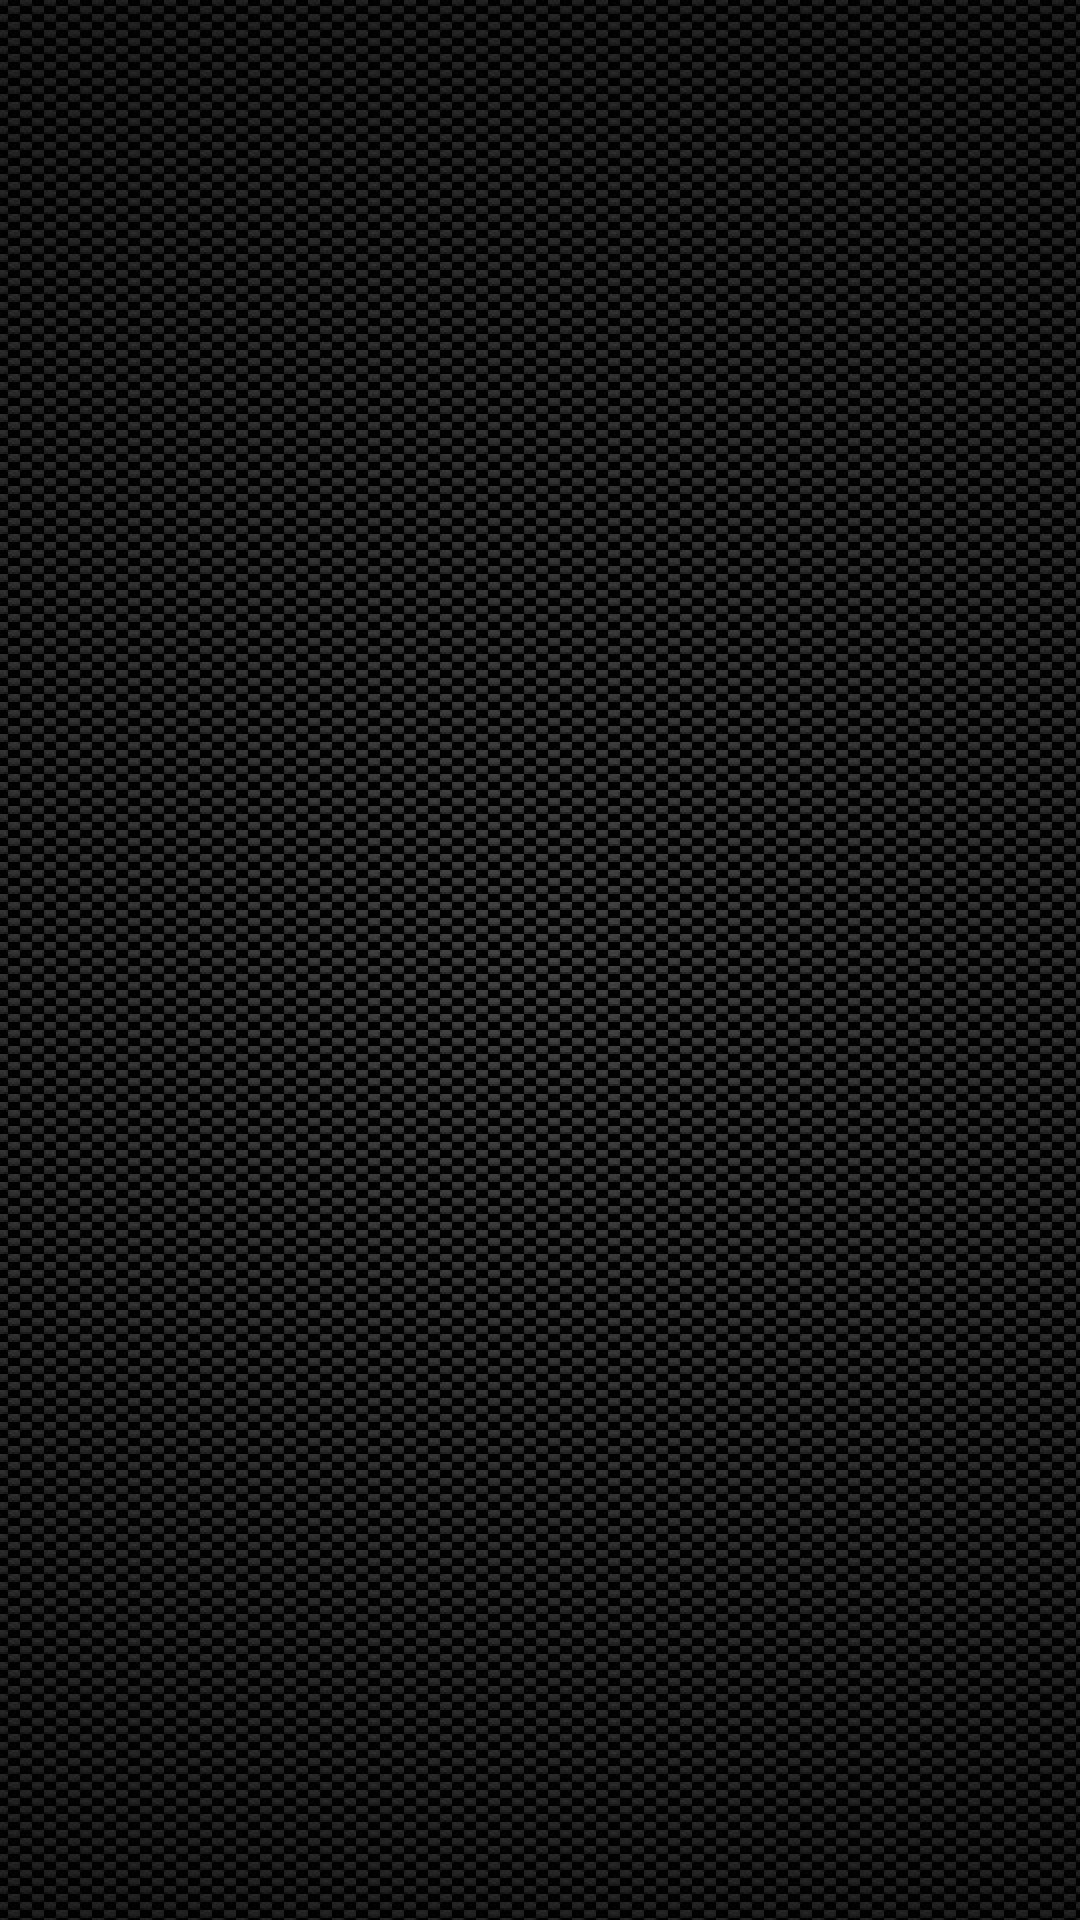 Free Download Carbon Fiber Iphone Wallpaper 1080x19 For Your Desktop Mobile Tablet Explore 69 Black Carbon Wallpaper Carbon Fiber Wallpaper For Walls Carbon Fiber Wallpaper 19x1080 4k Carbon Fiber Wallpaper